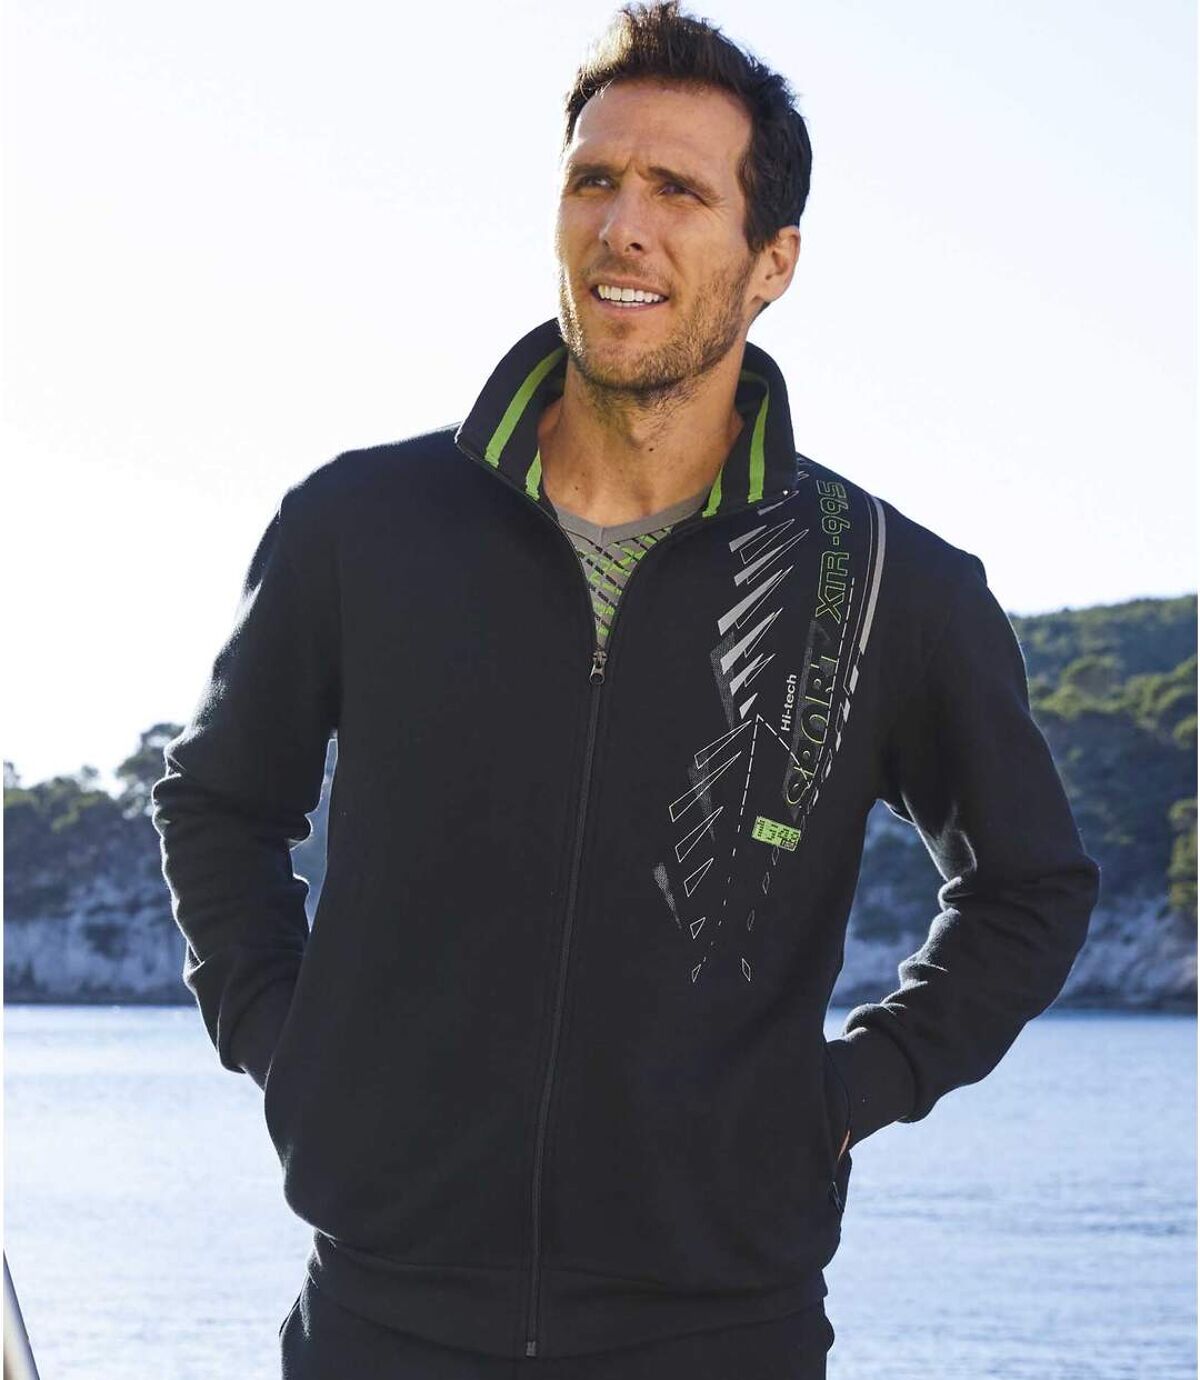 Men's Black Brushed Fleece Sports Jacket - Full Zip Atlas For Men